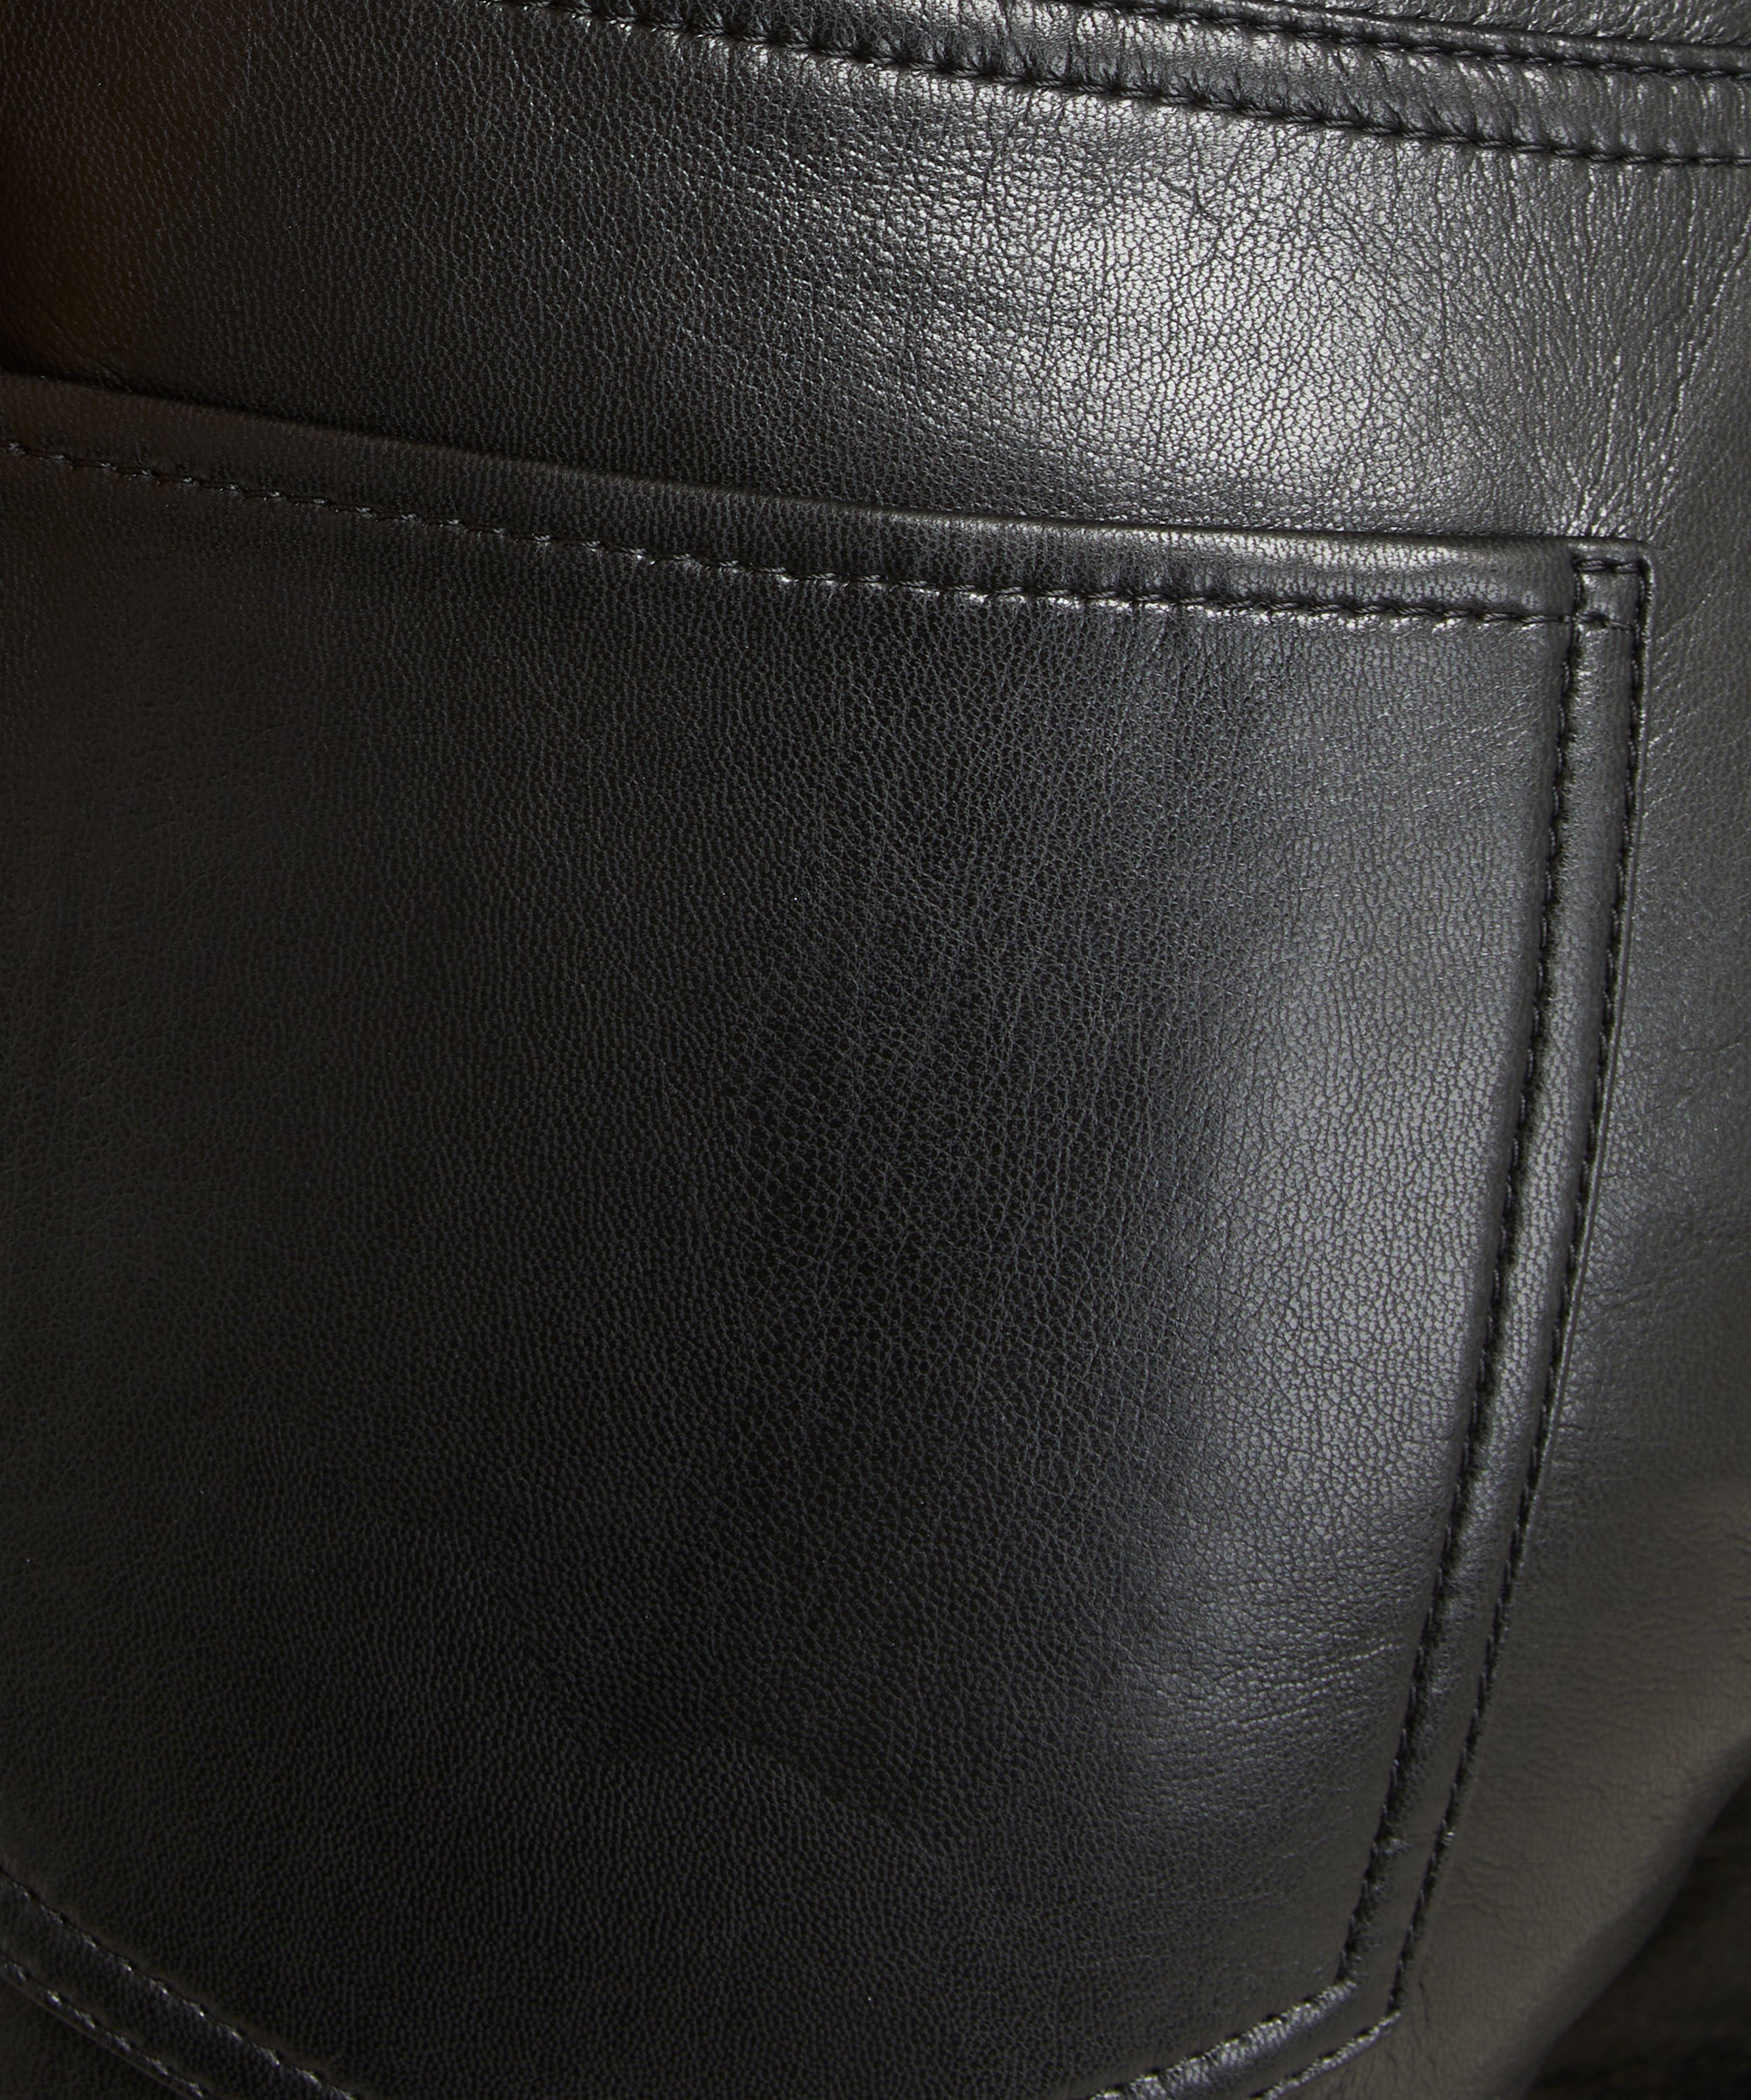 Black 'Le Jane' Leather Pants by FRAME on Sale